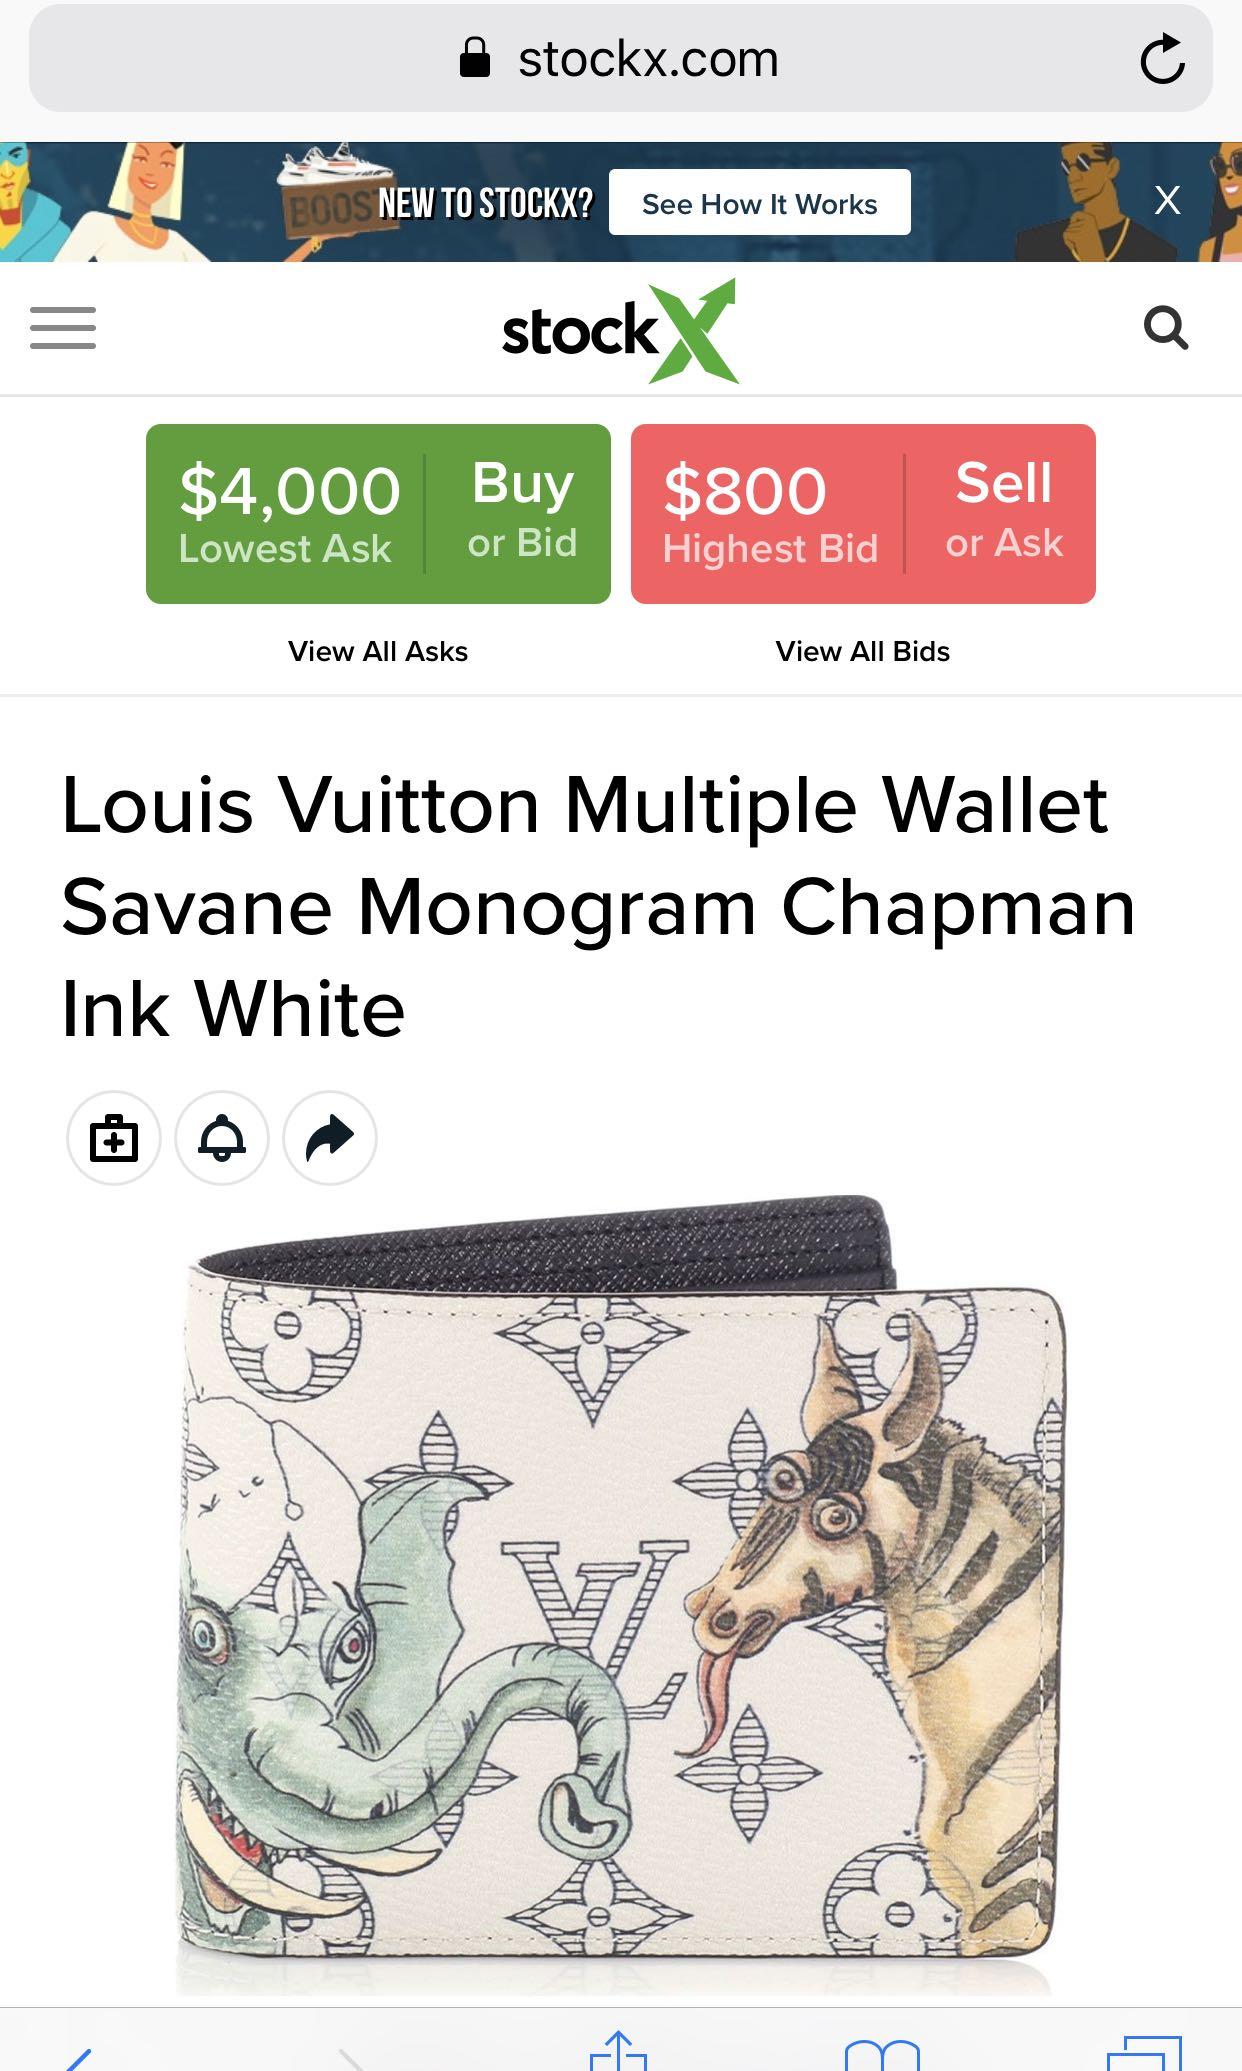 Louis Vuitton Multiple Wallet Savane Monogram Chapman Ink White